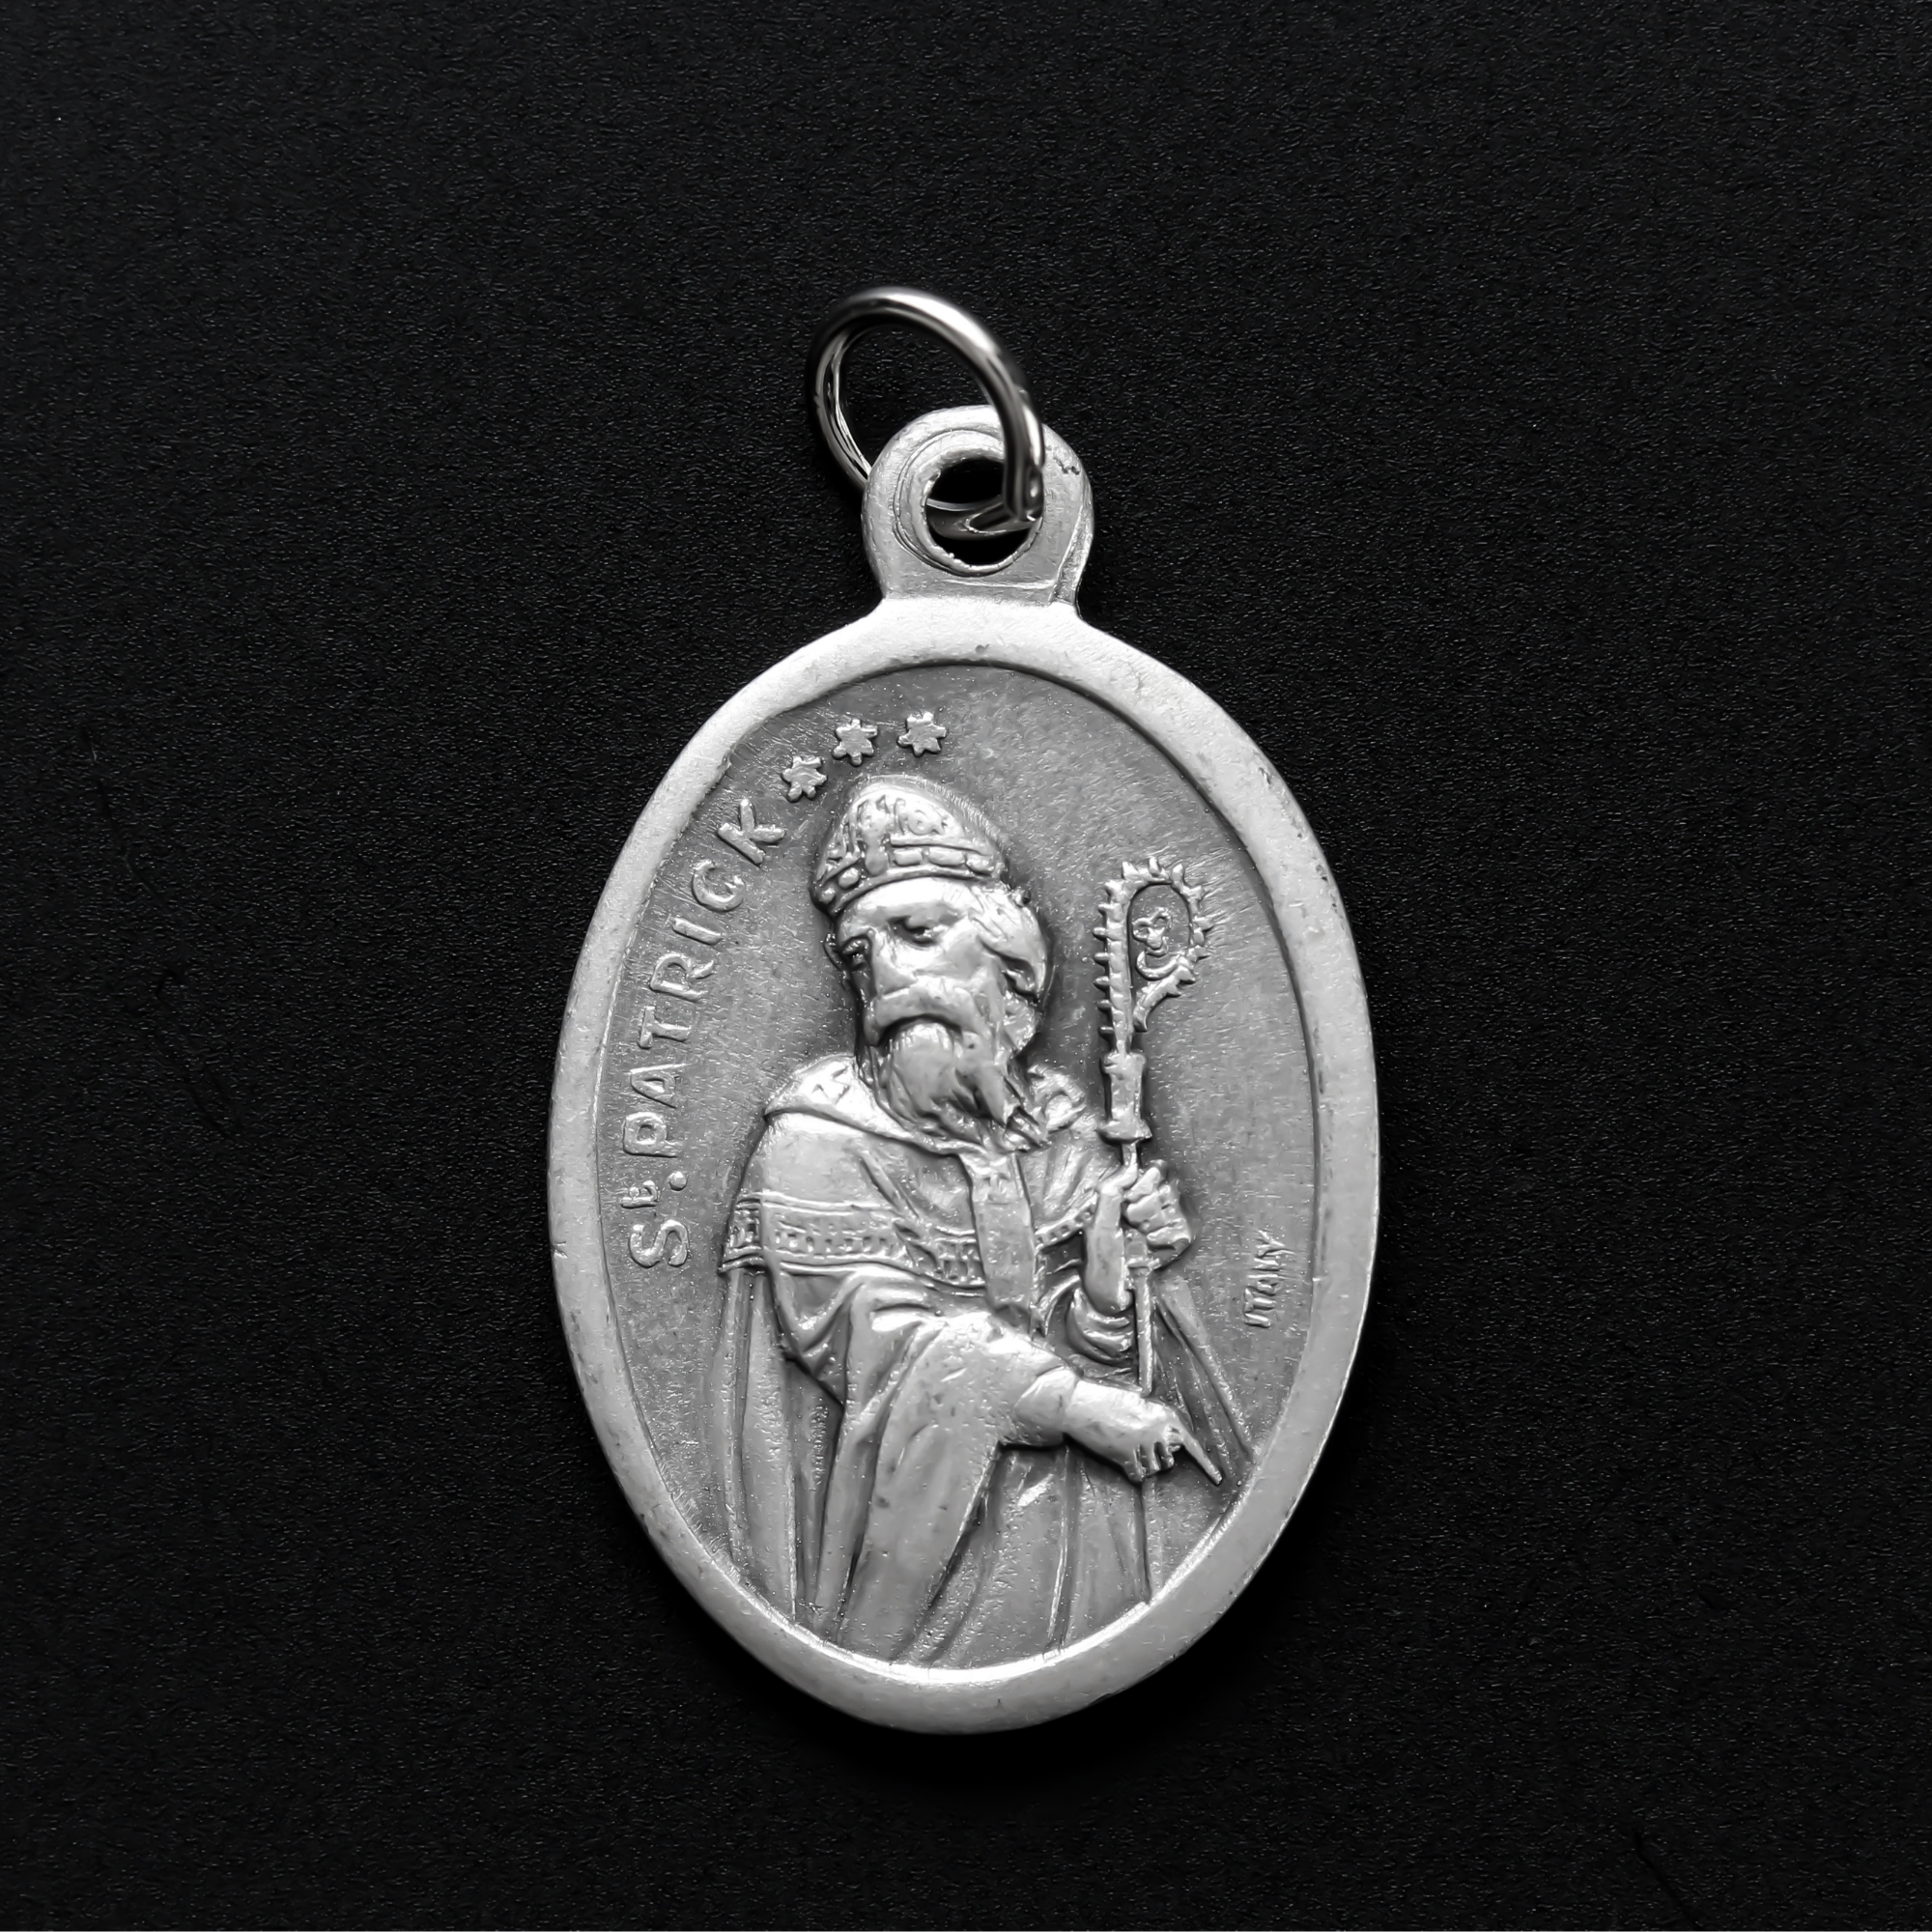 die cast silver medal depicting patron saint patrick of ireland